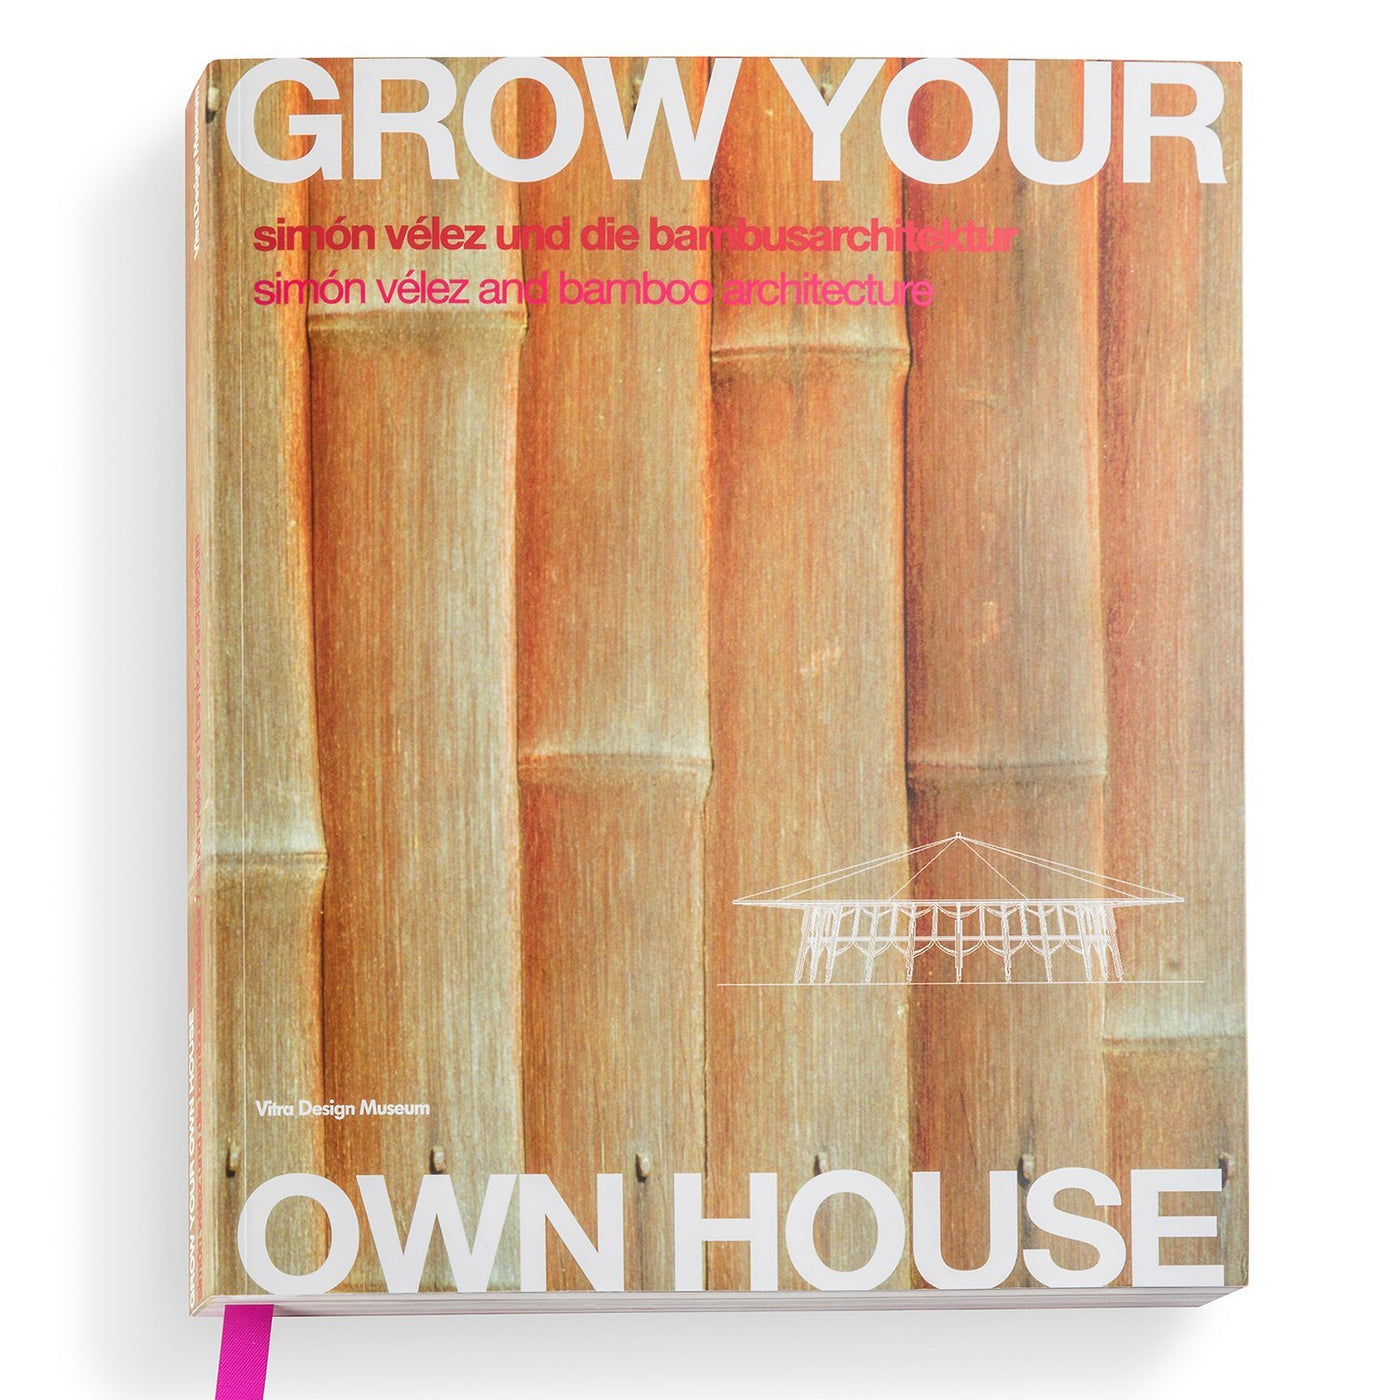 Grow Your own House: Simón Vélez and the Bamboo Architecture